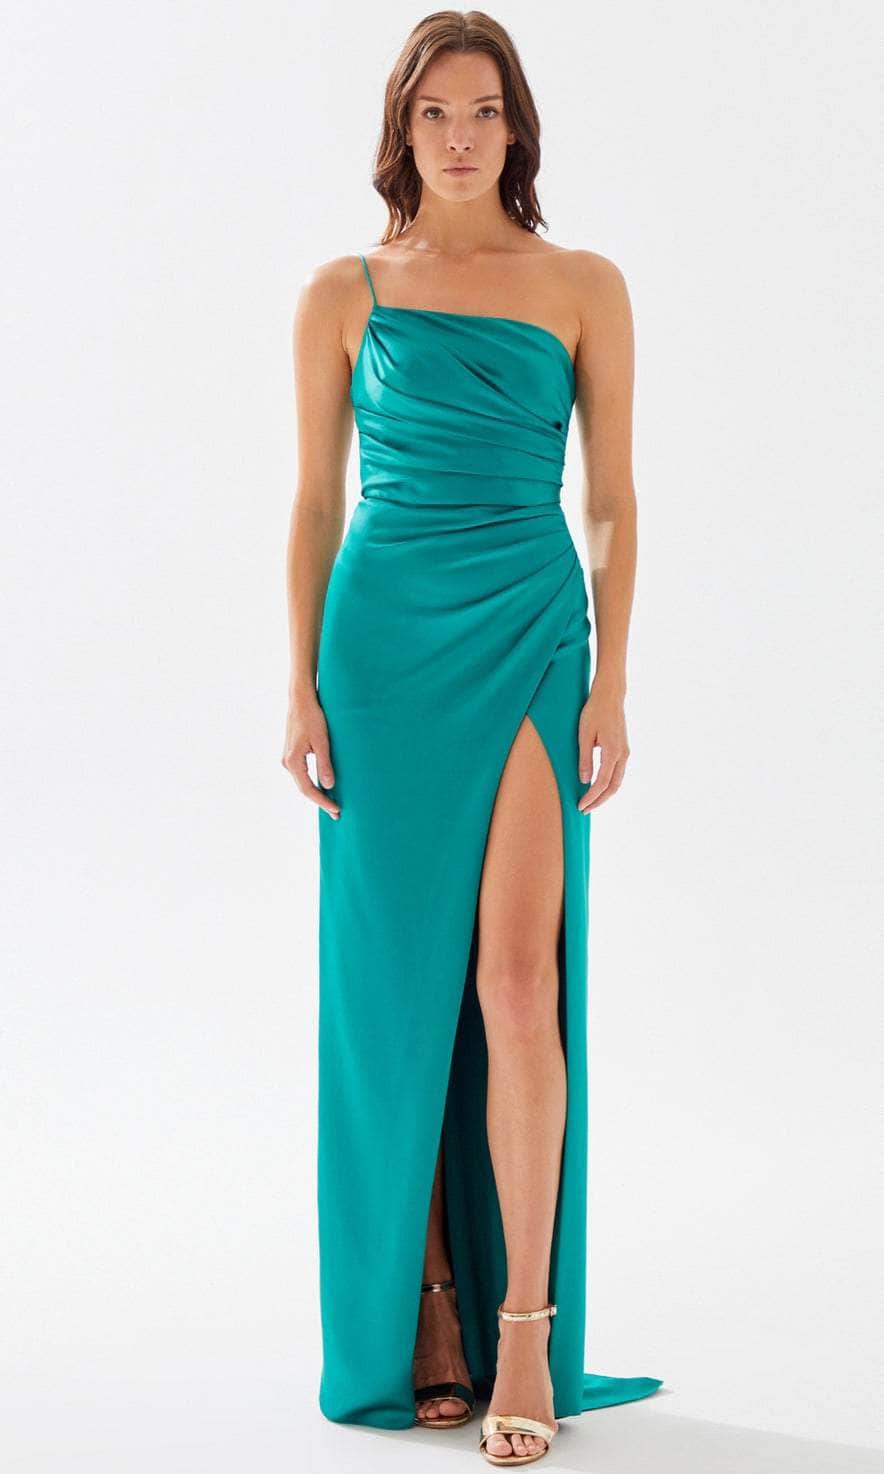 Tarik Ediz 52008 - Ruched High Slit Prom Dress Special Occasion Dress 00 / Emerald